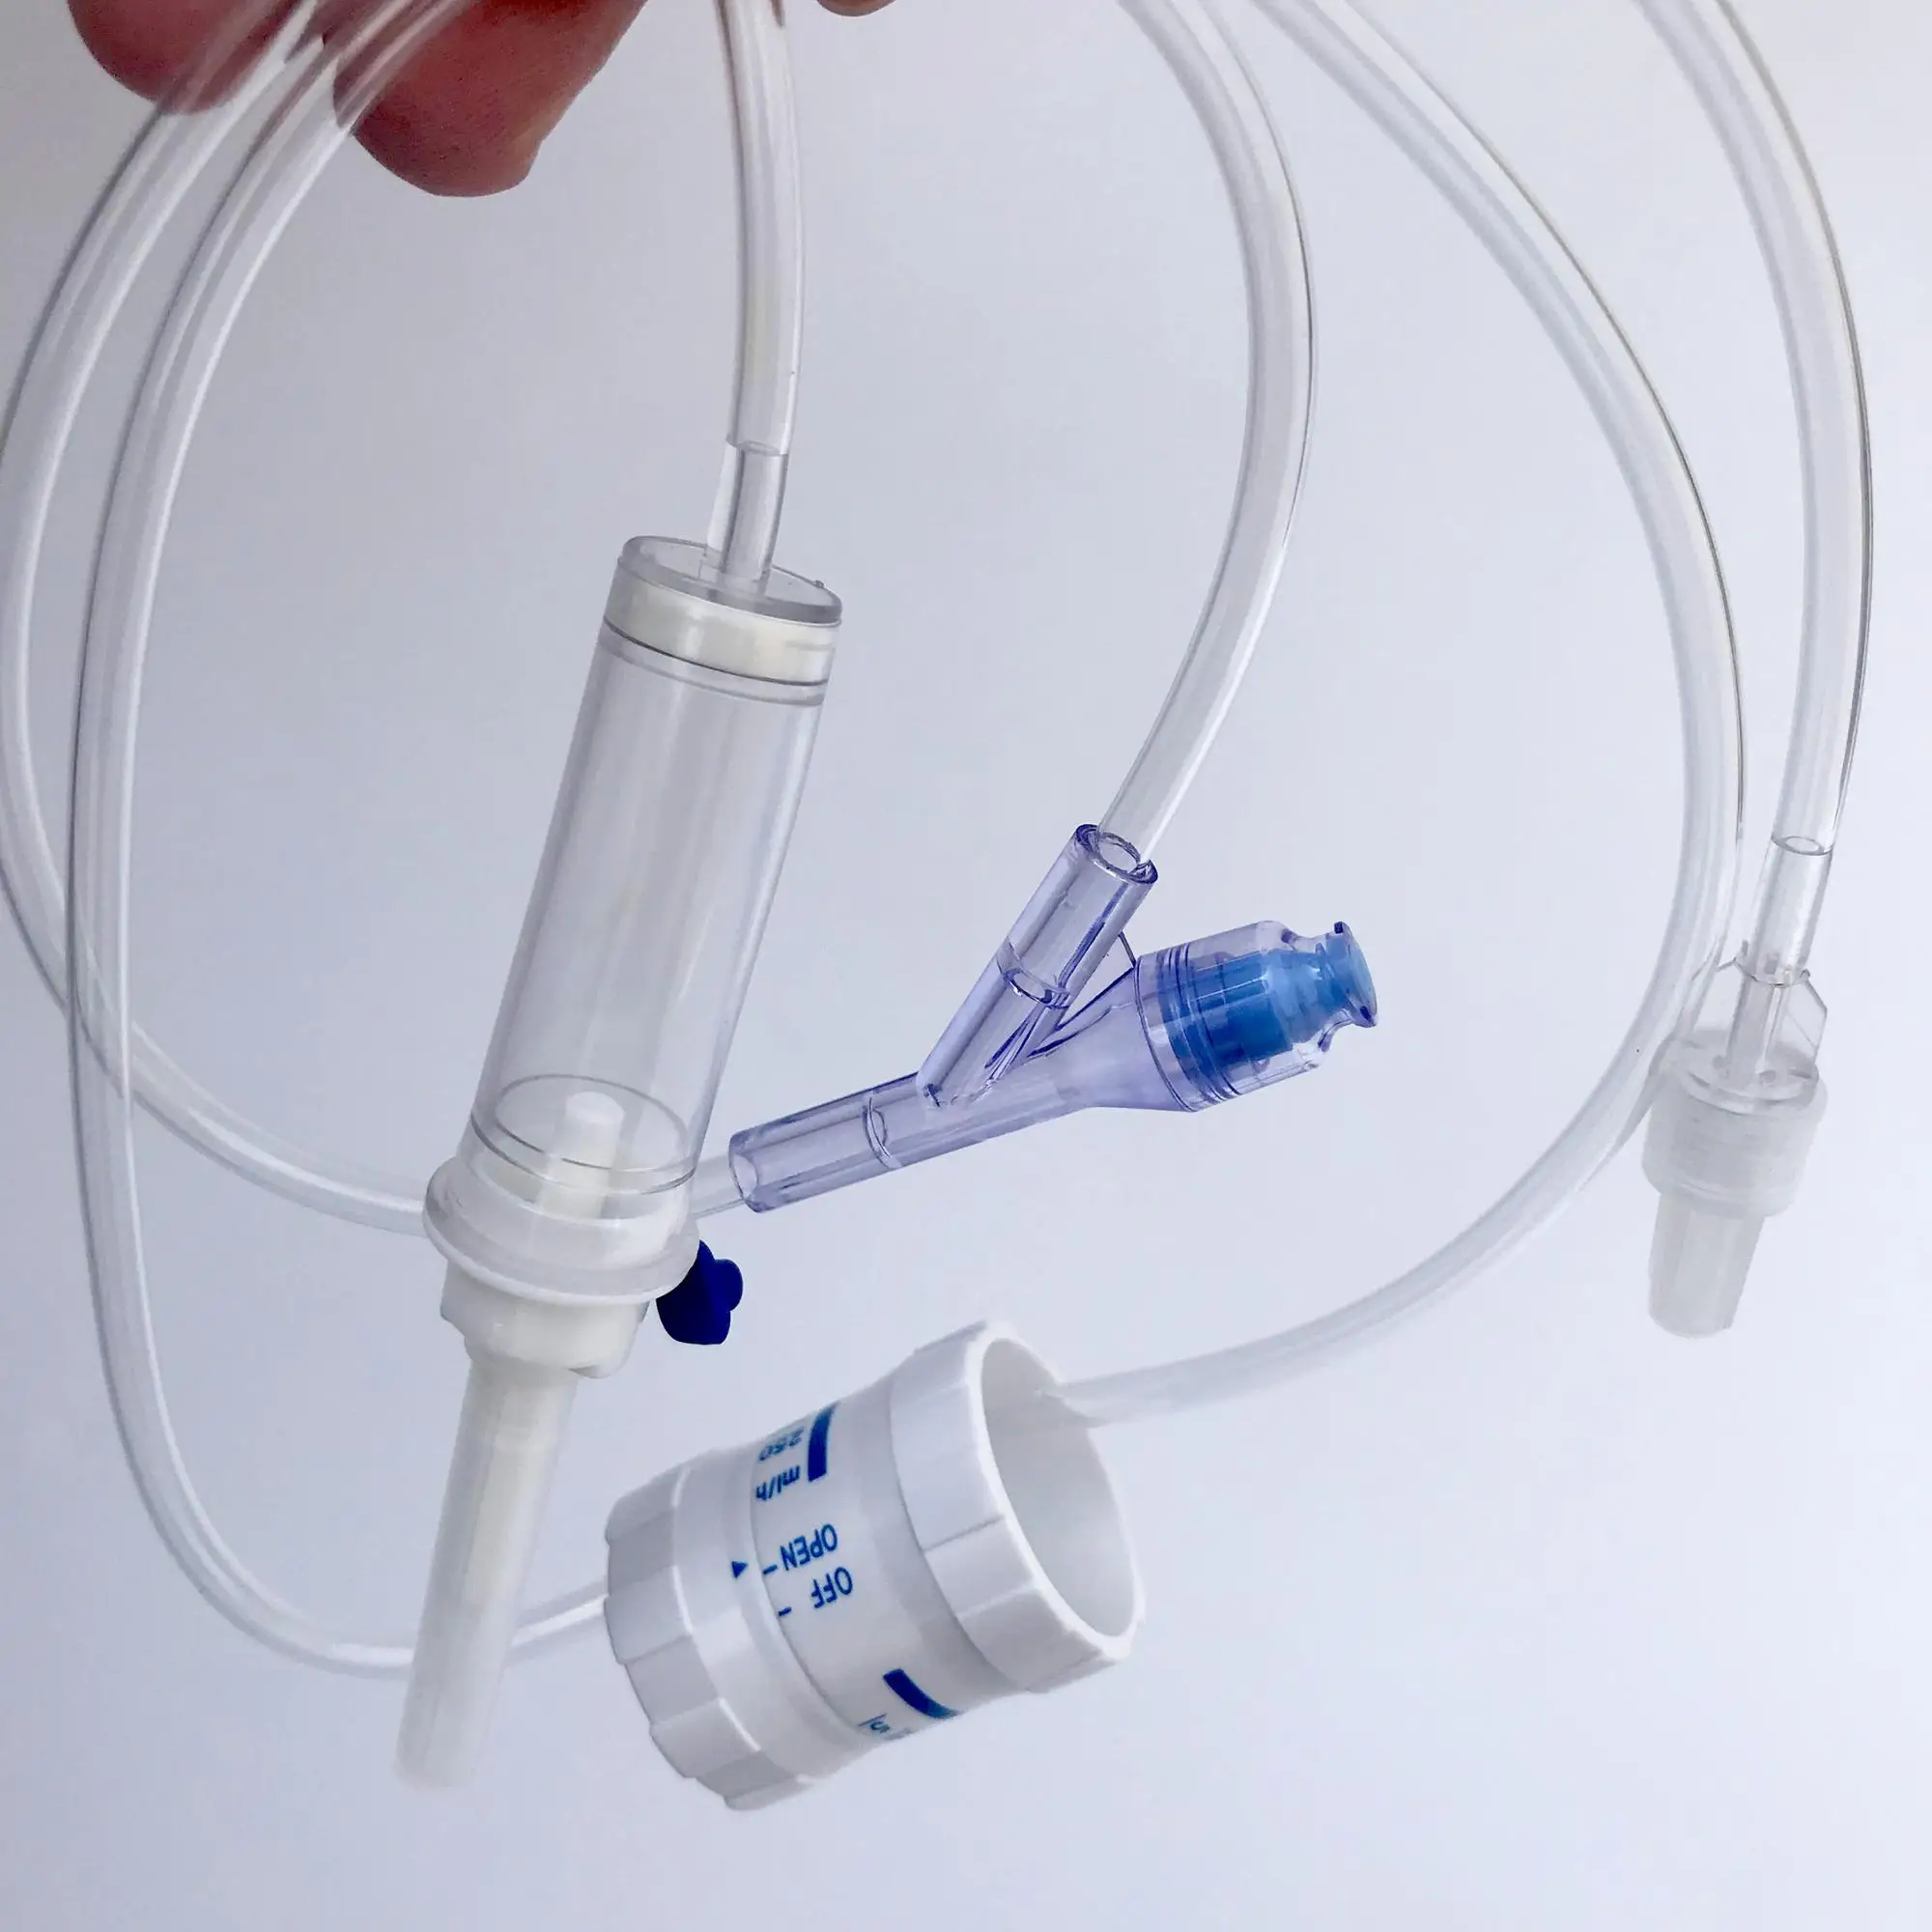 
IV flow regulator infusion set / disposable infusion set 